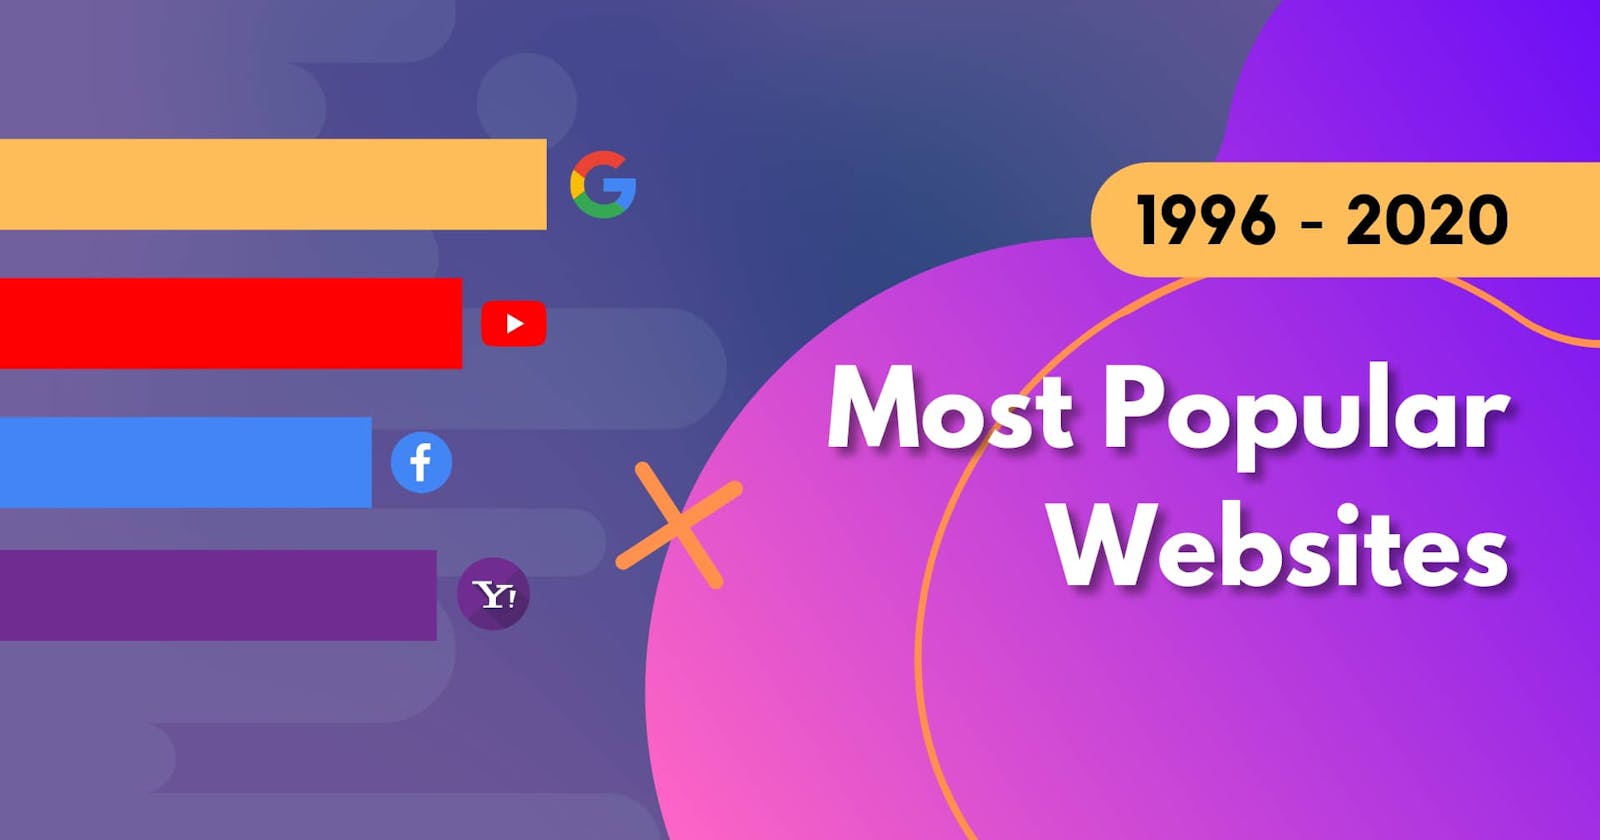 Most Popular Websites (1996 - 2020) | Based on Traffic & Popularity